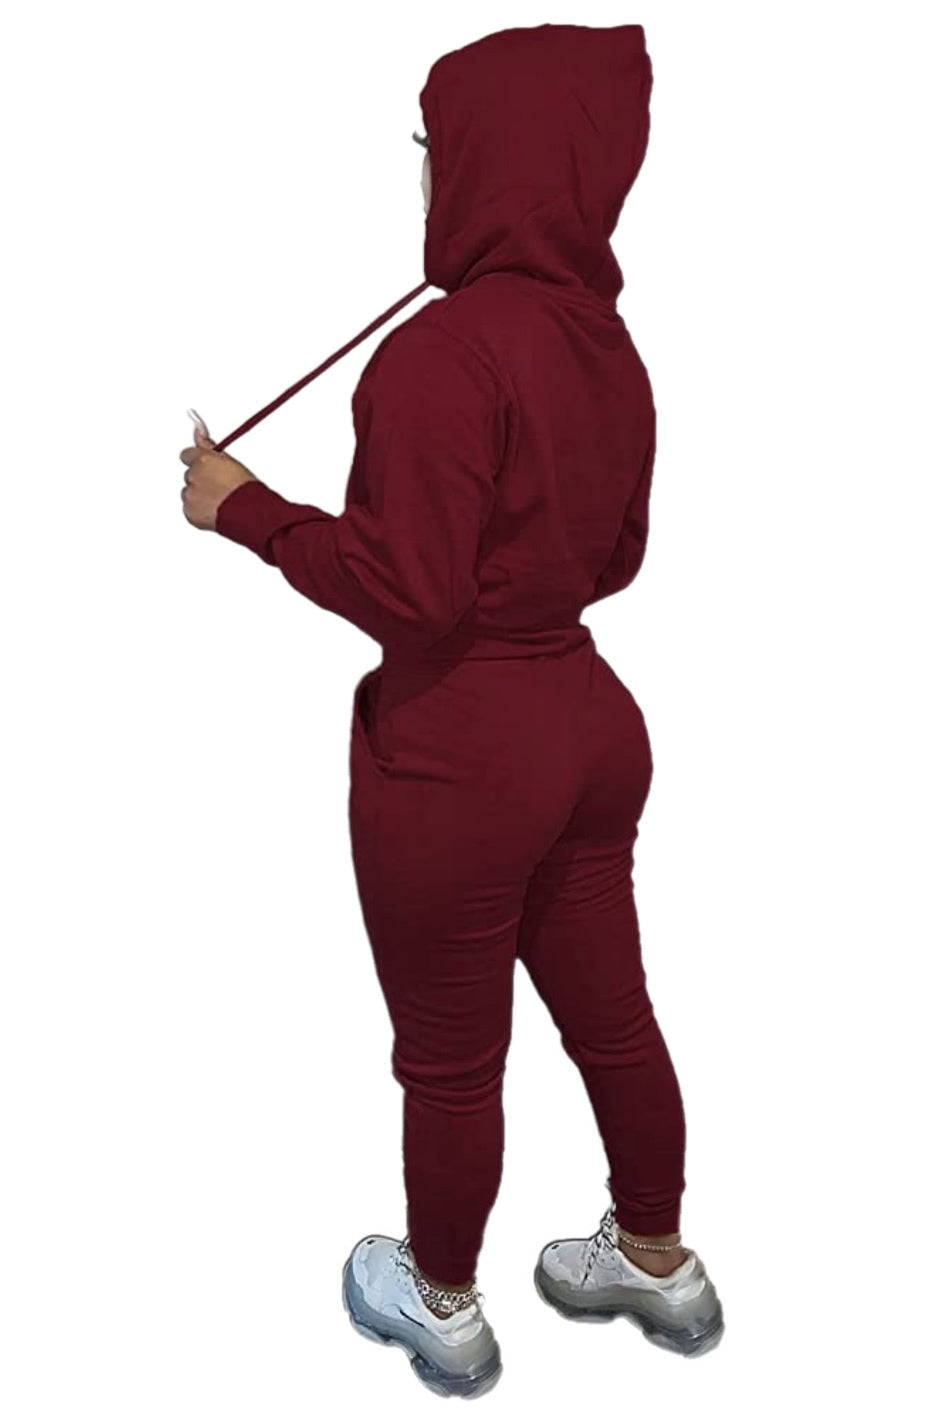 Sweatsuit for Women Set 2 Piece Jogging Outfit Long Sleeve Hoodie Sweatshirt Sweatpants Tracksuit